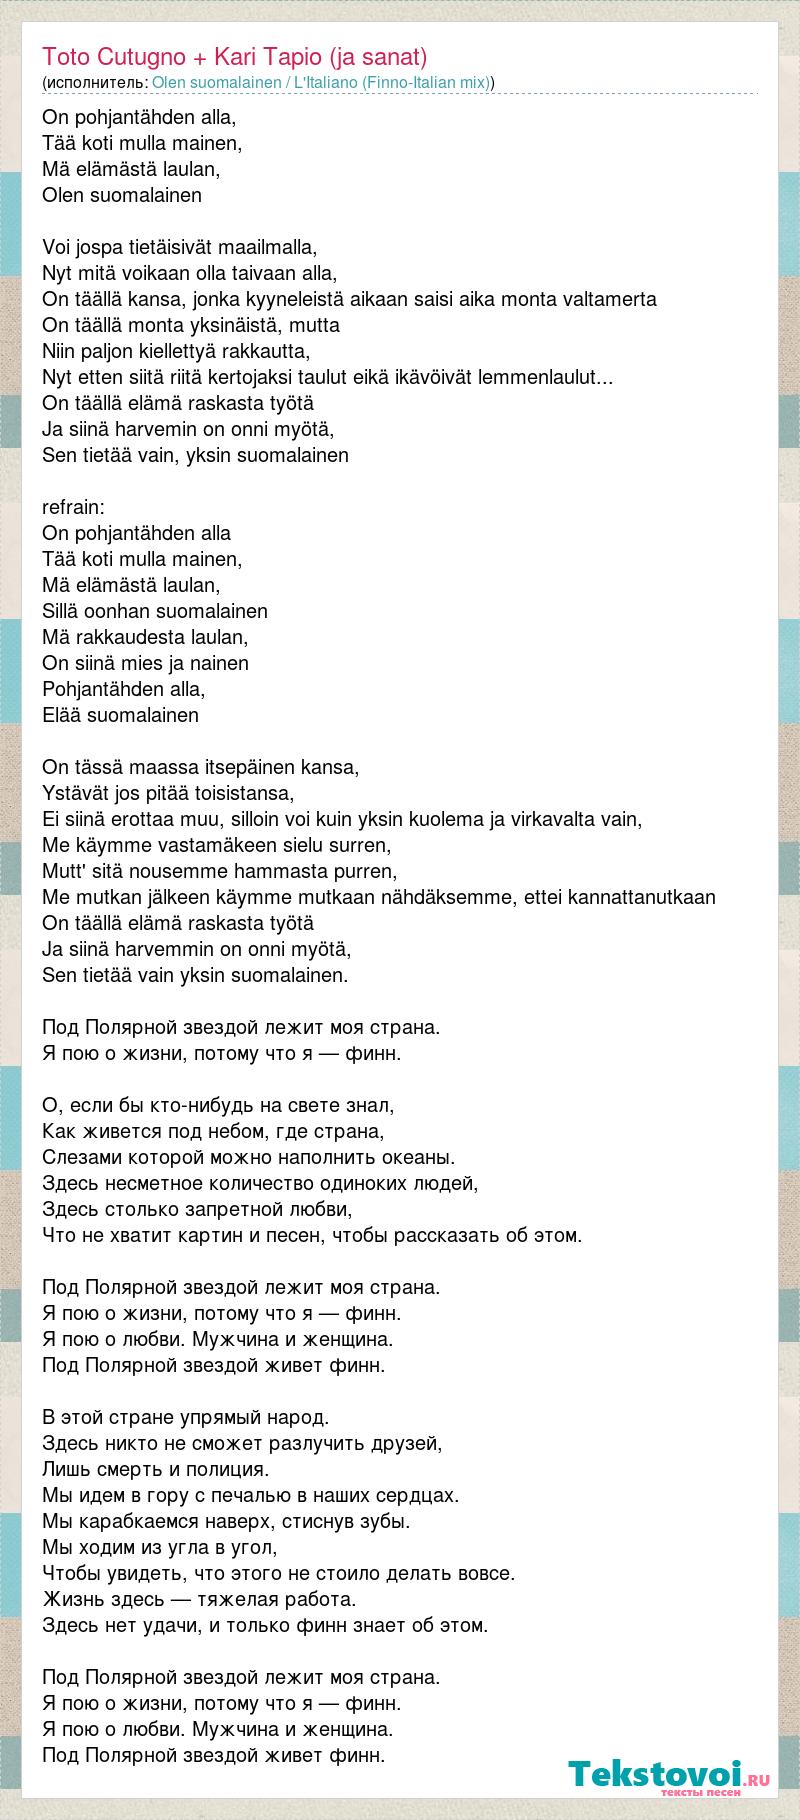 Текст песни Toto Cutugno + Kari Tapio (ja sanat), слова песни